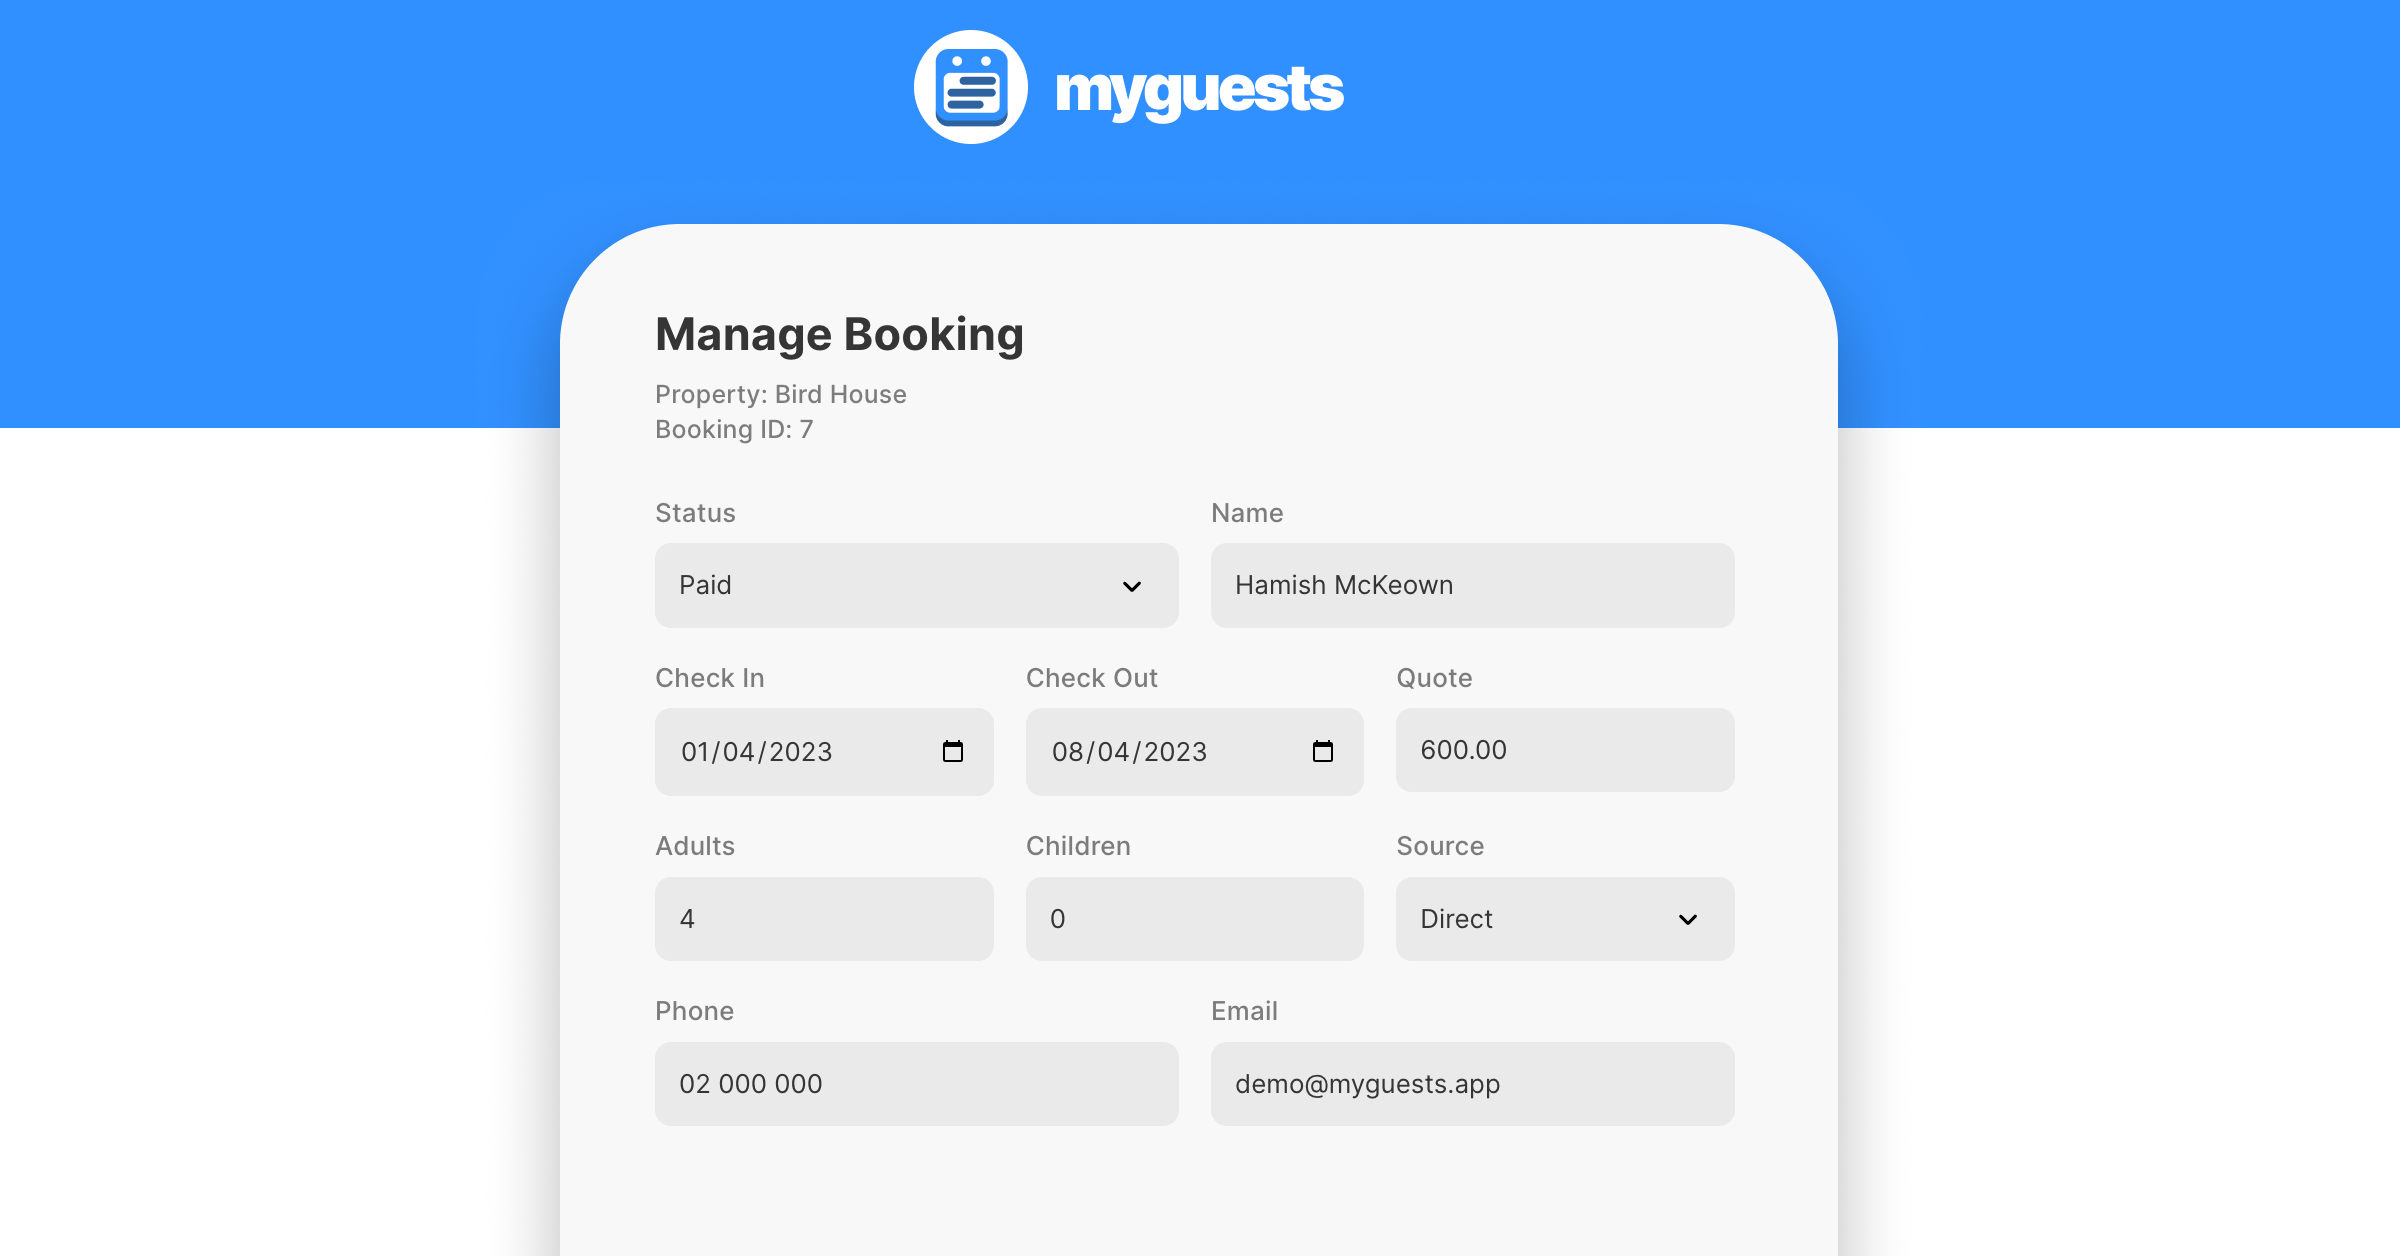 myguests Managing Bookings